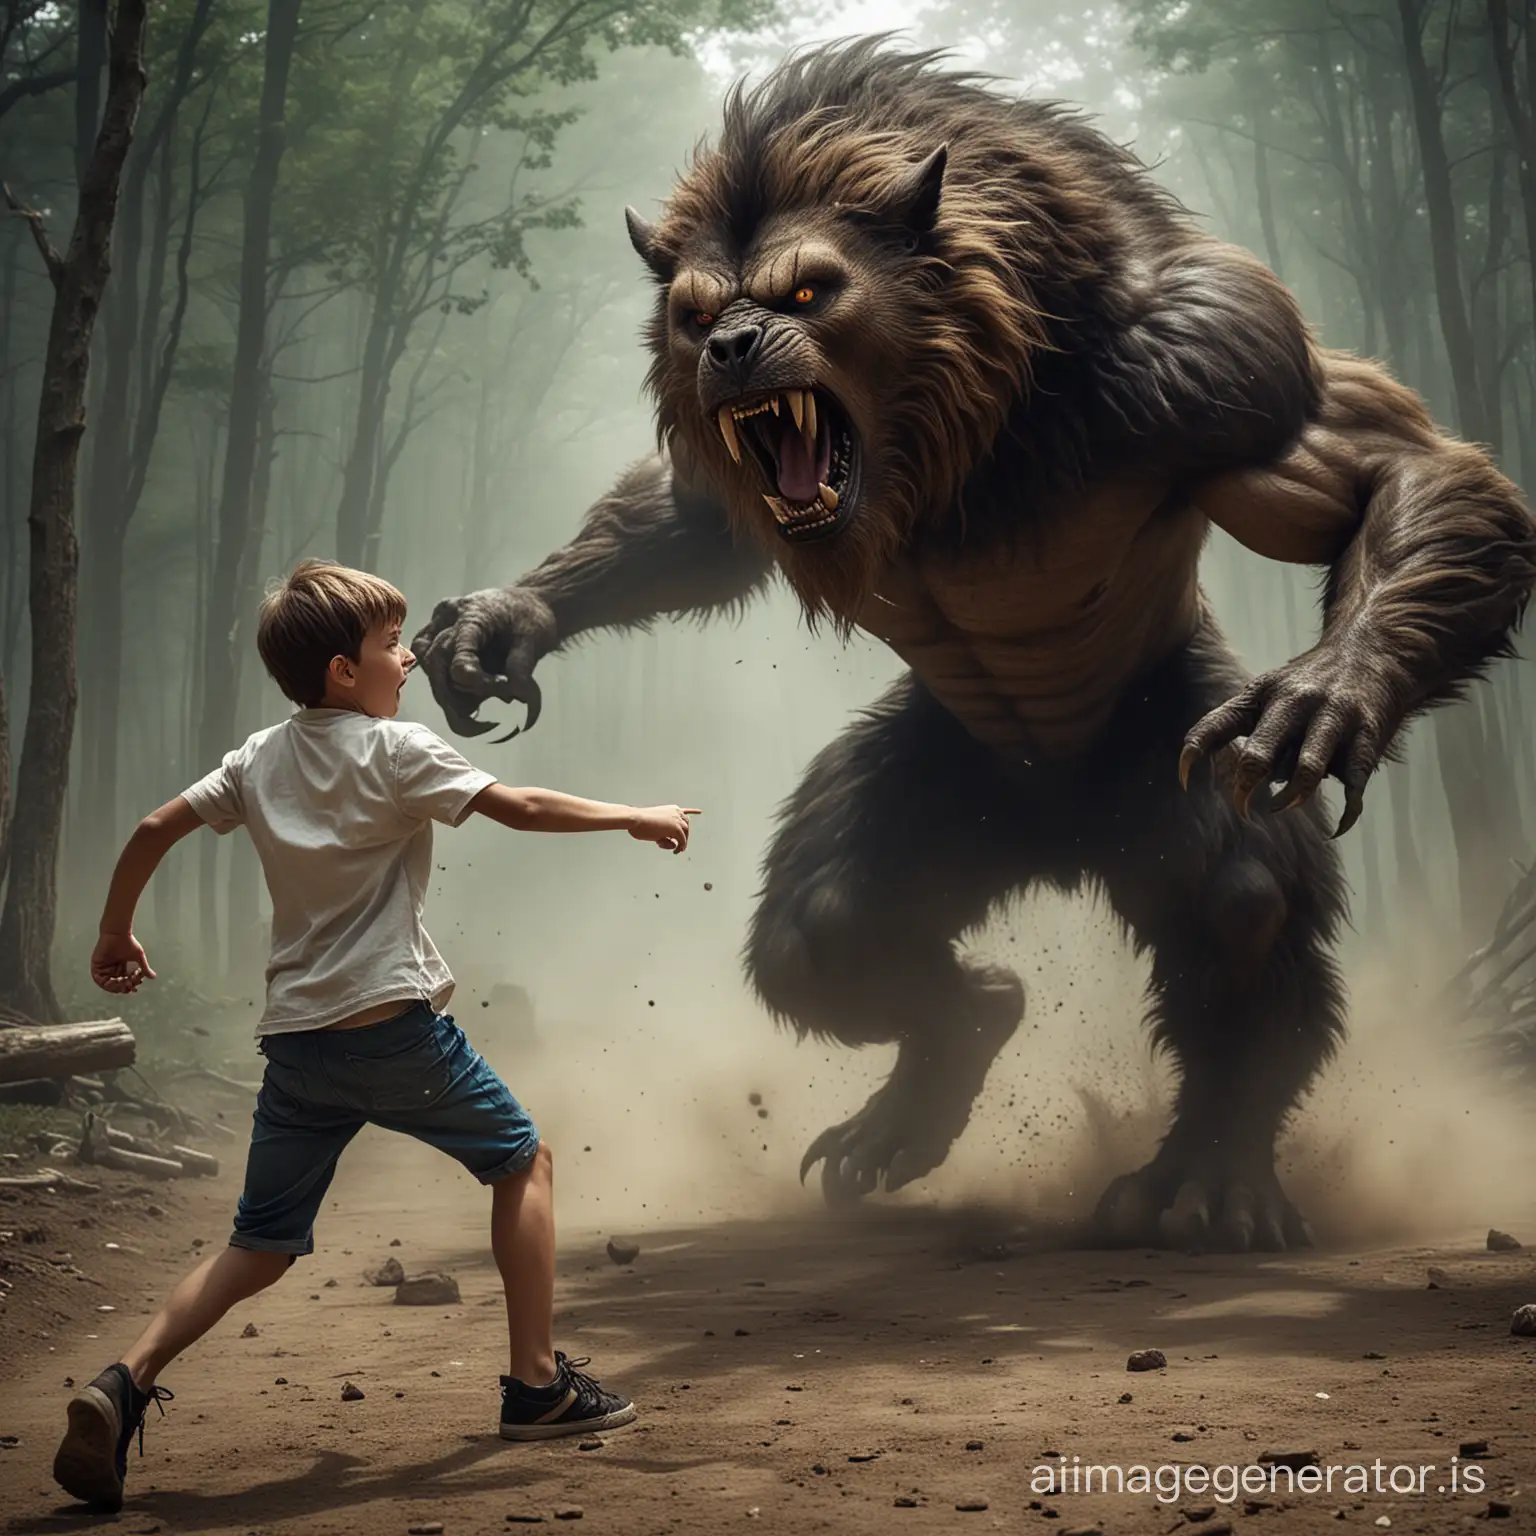 Fearful-Encounter-Boy-Facing-Ferocious-Beast